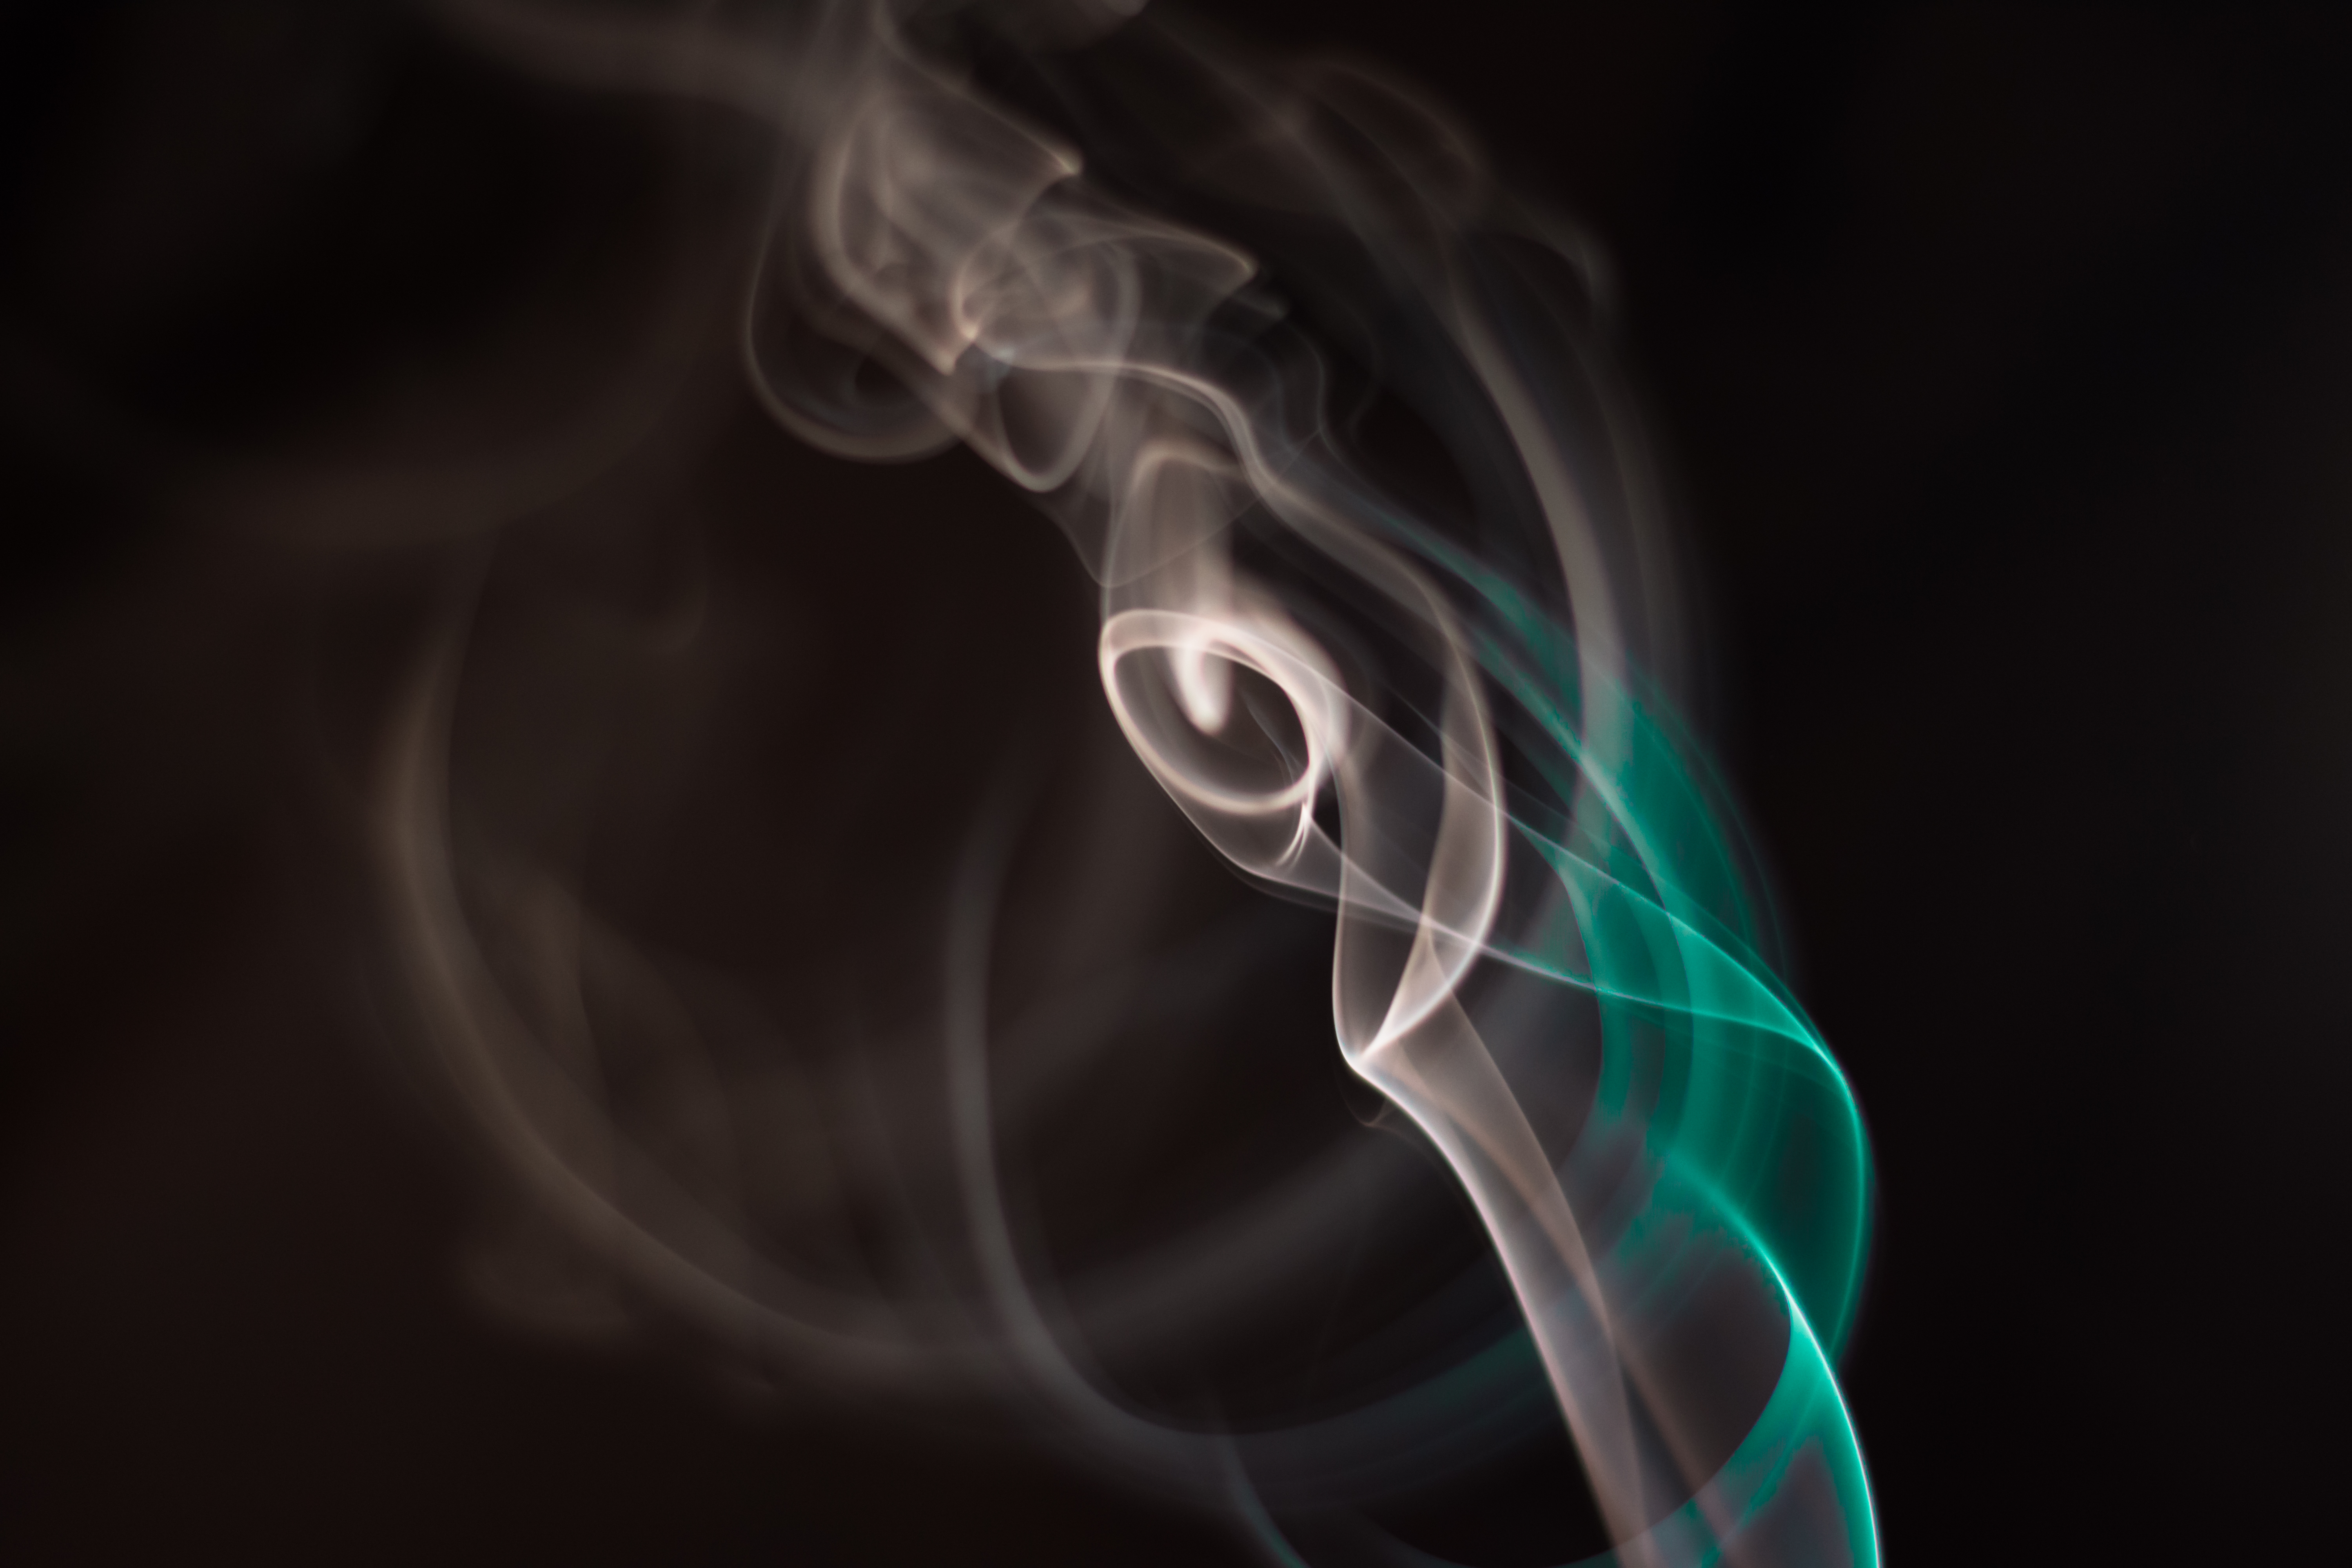 coloured smoke, colored smoke, abstract, smoke, spiral, swirling, involute